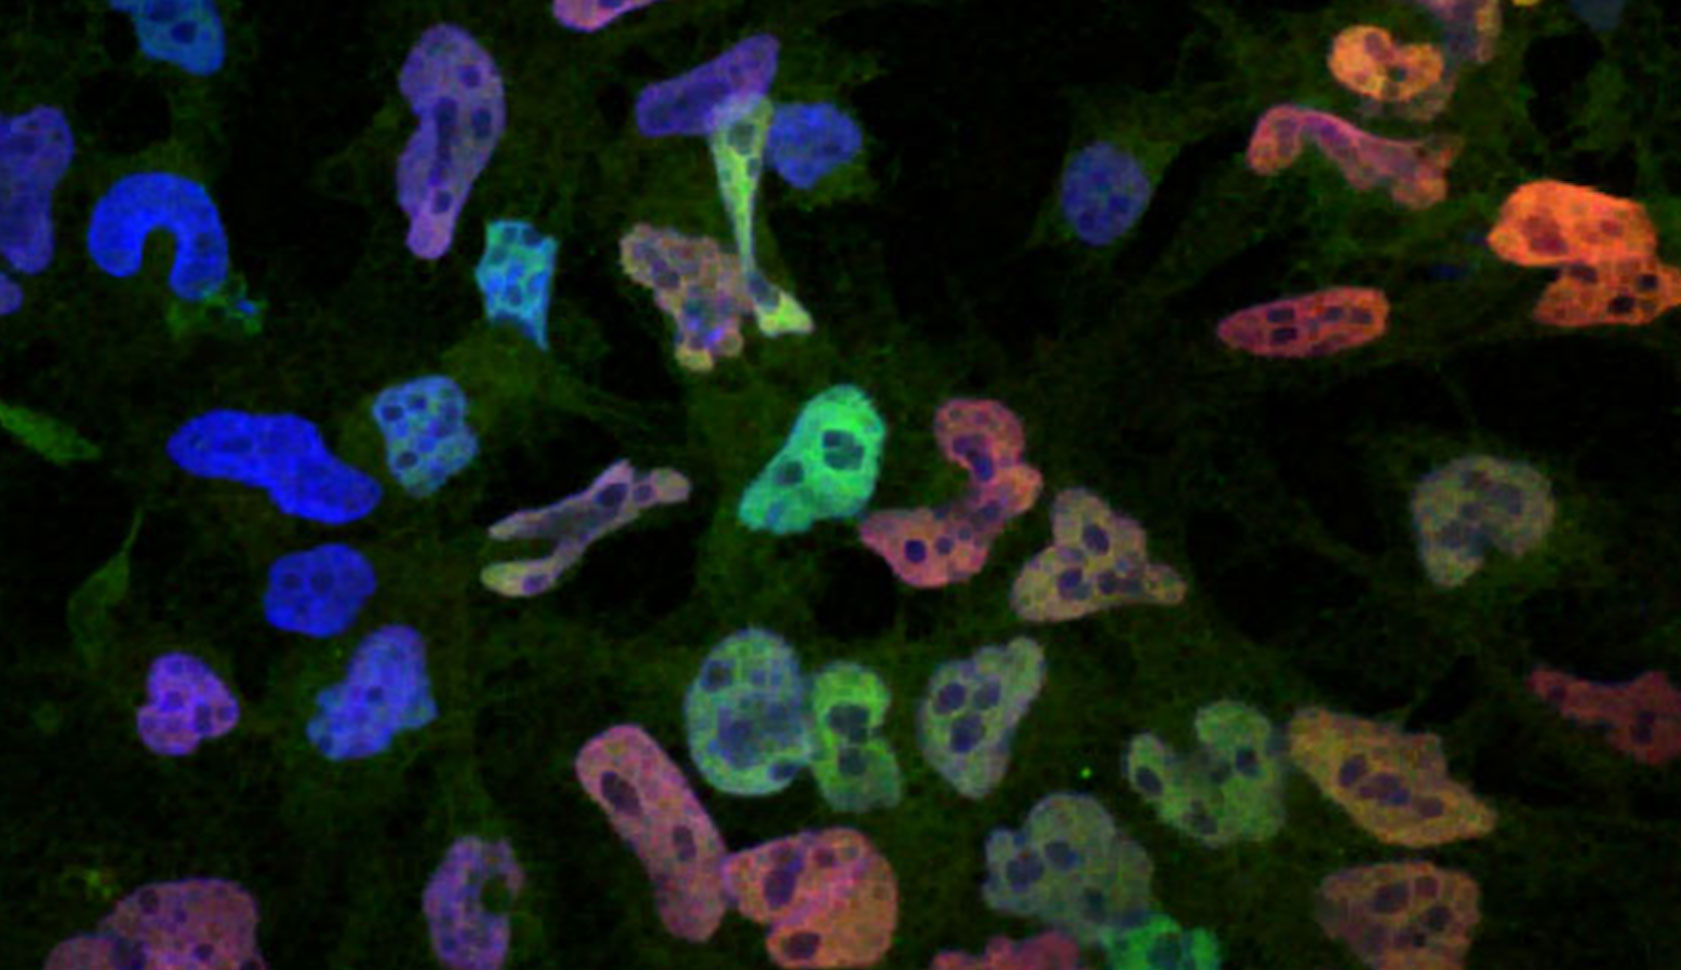 pluripotent-stem-cells